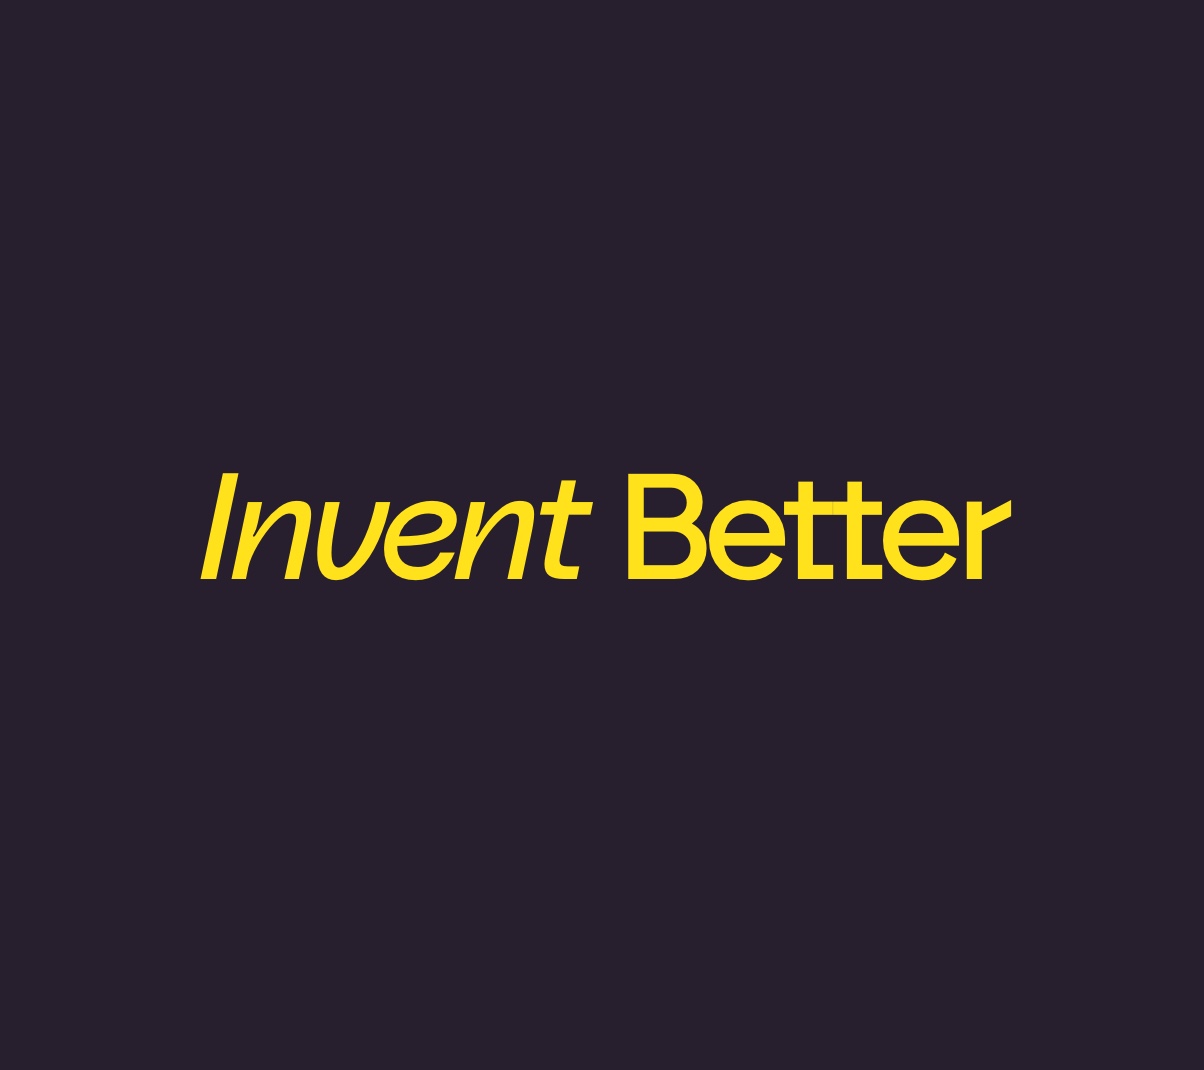 Invent Better slogan on a dark background, symbolizing vision.